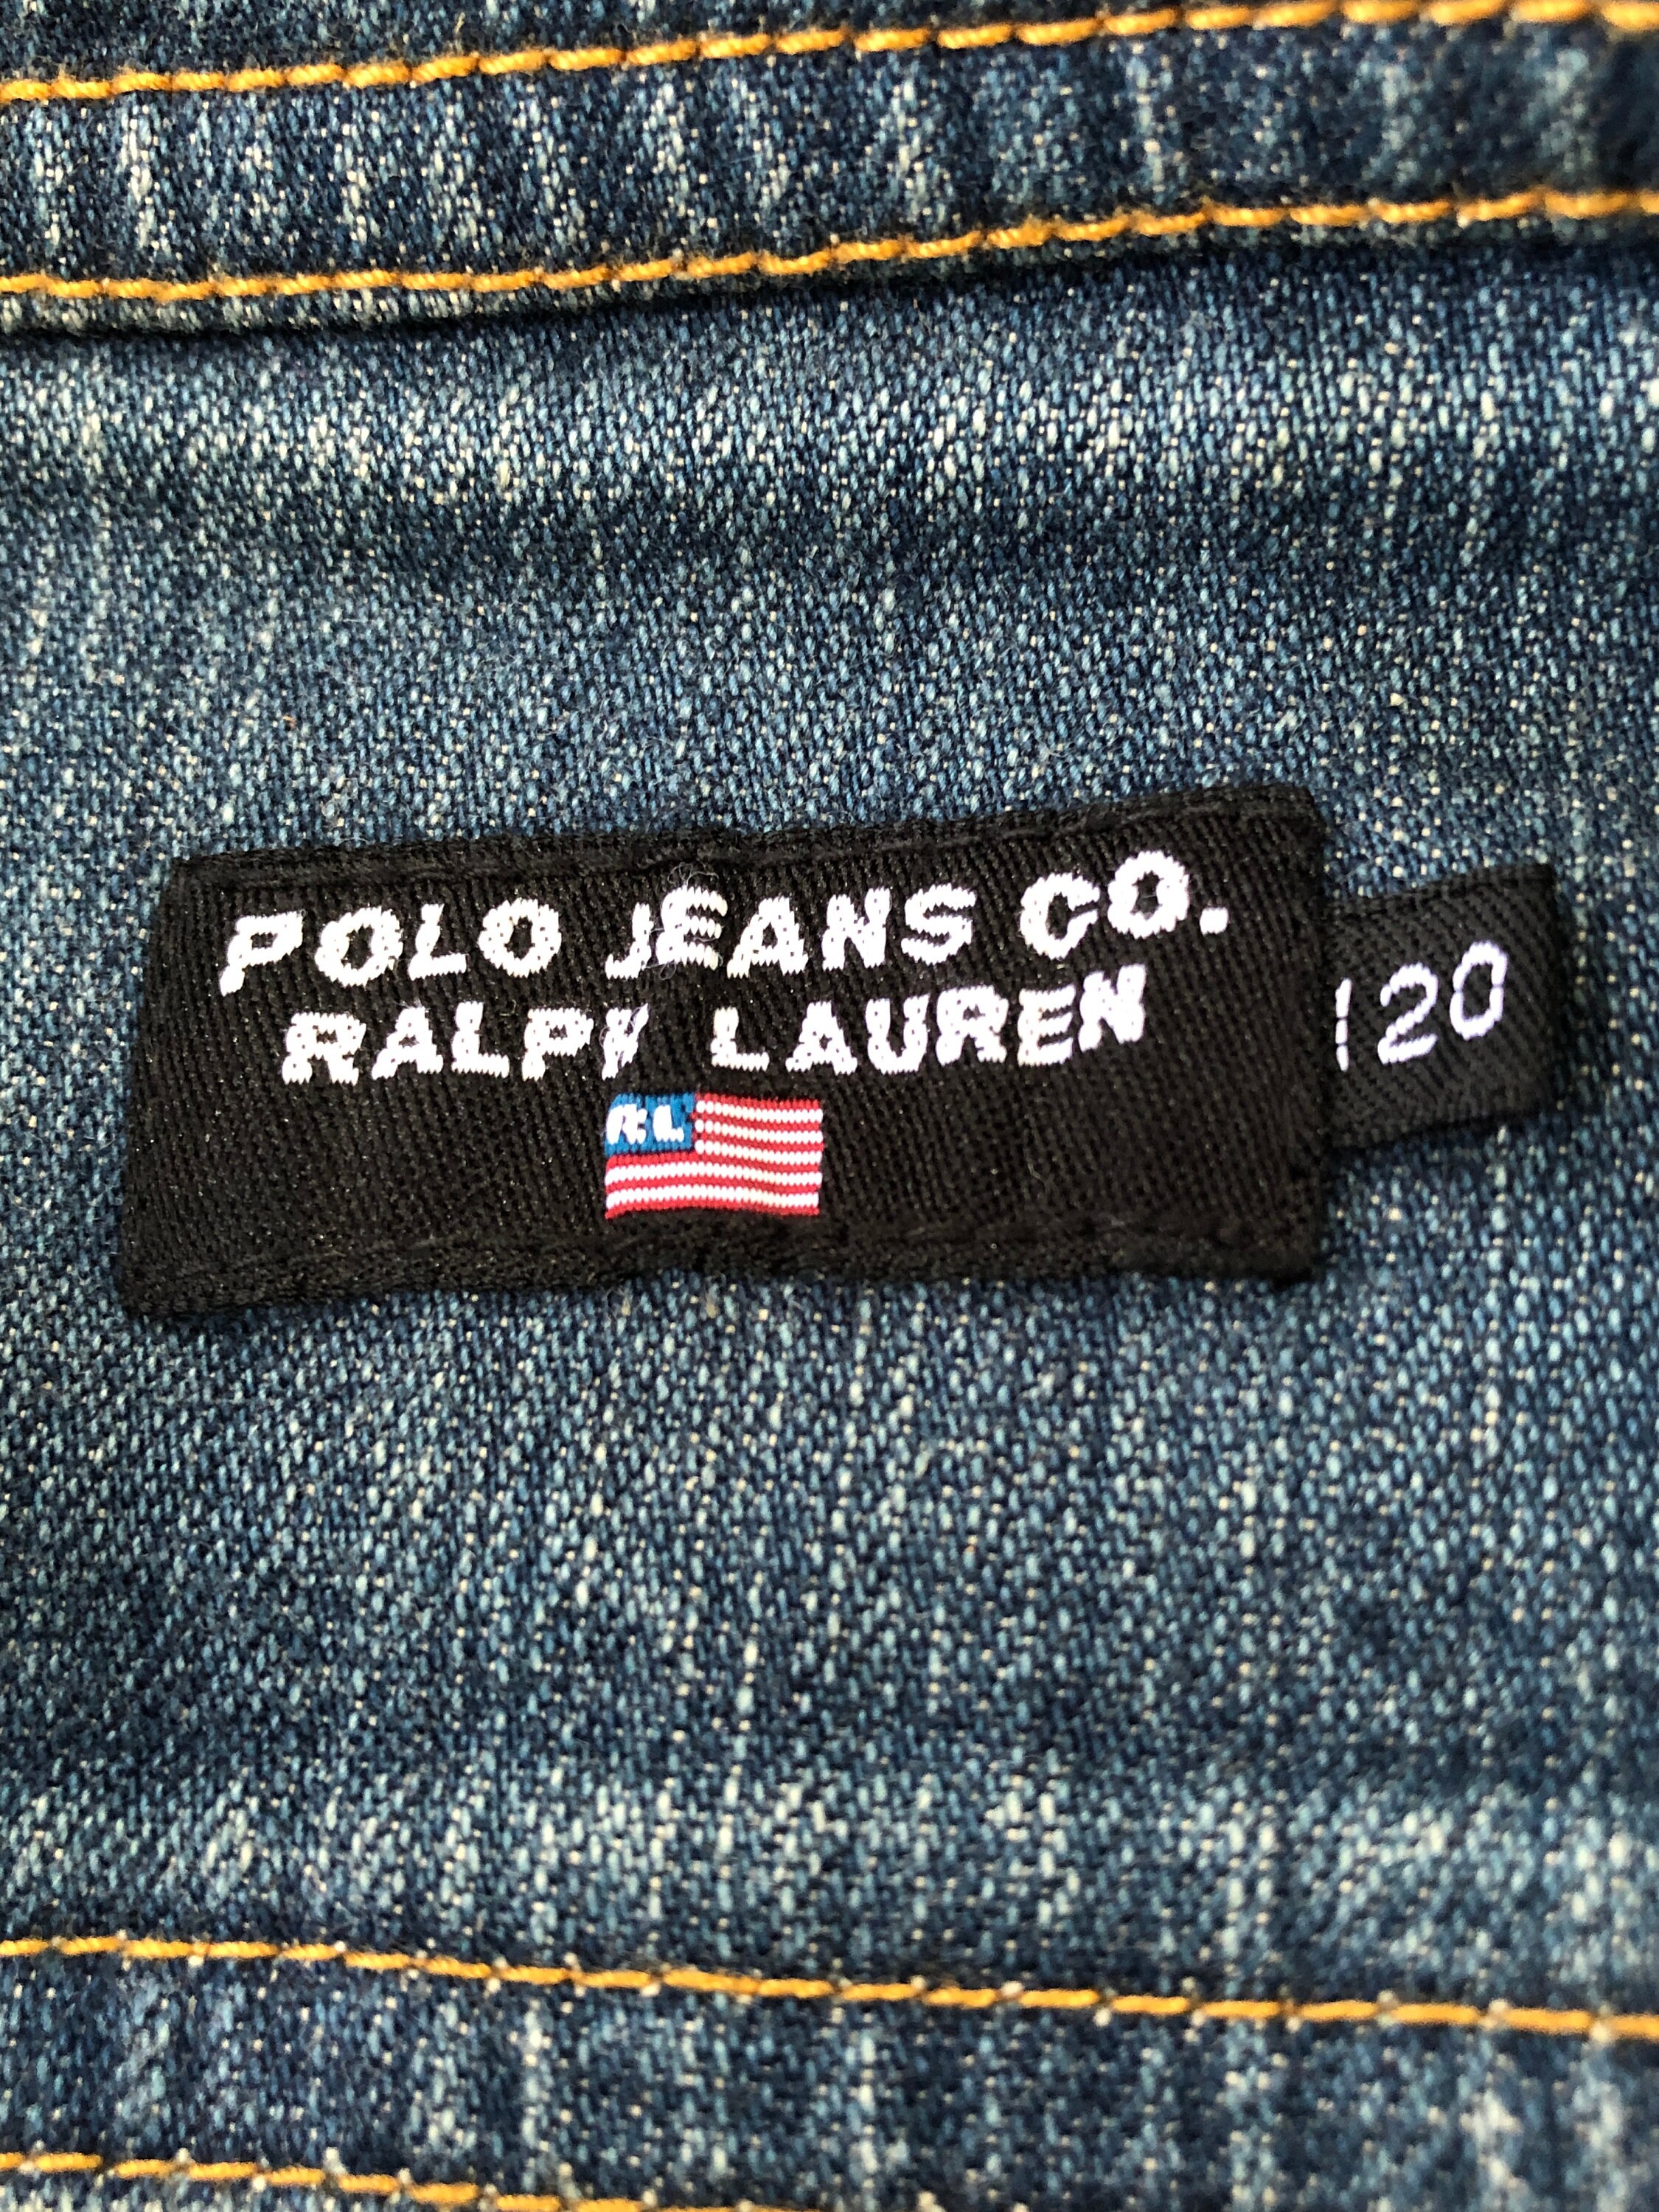 Vintage Polo Ralph Lauren Jacket for Kids code:kr - Etsy